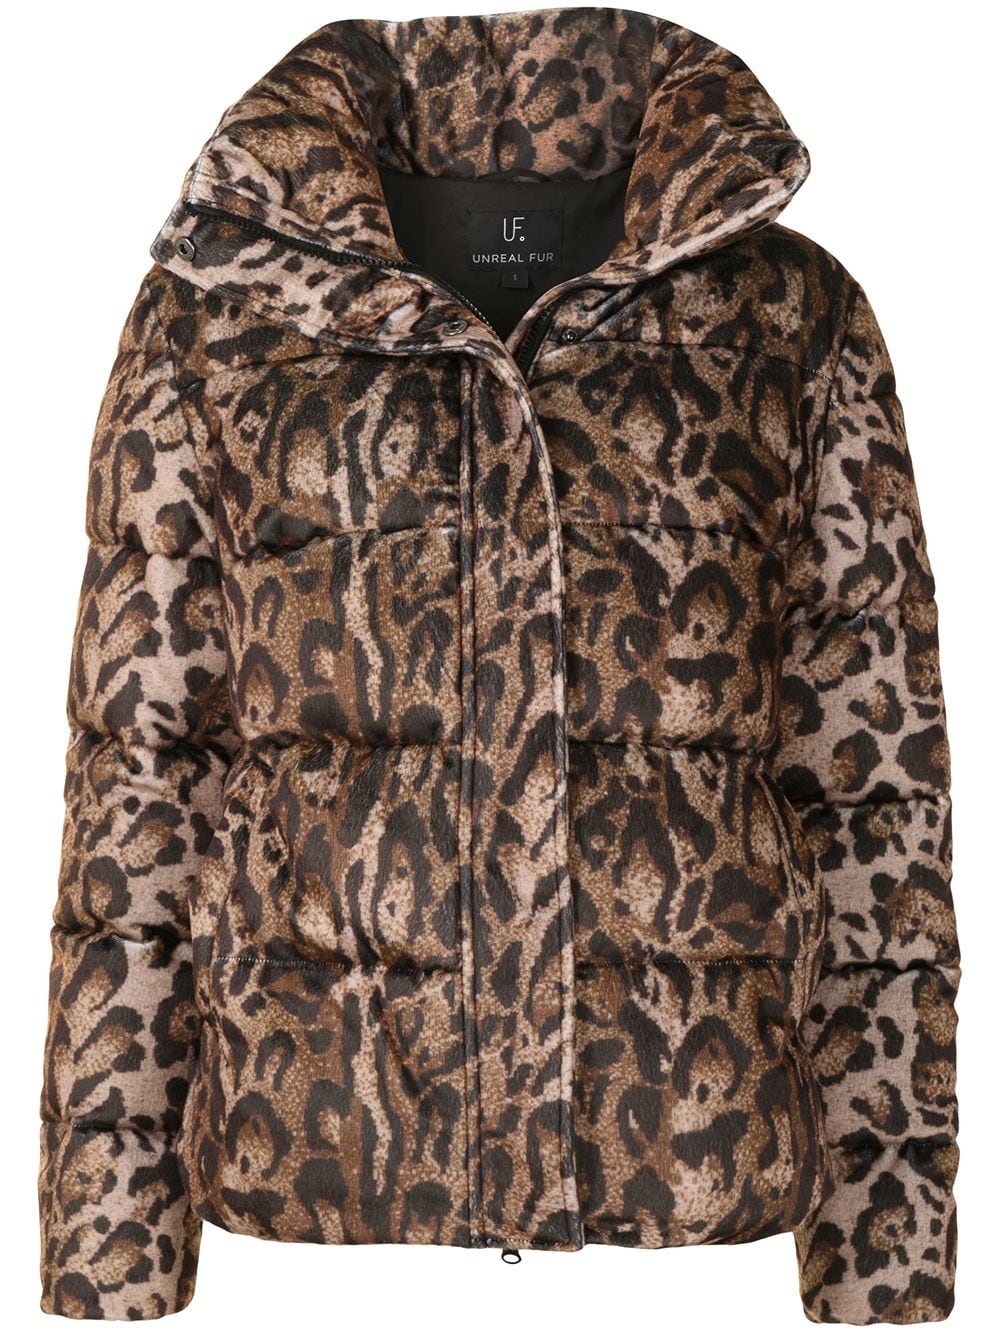 Unreal Fur - Huff & Puff leopard jacket